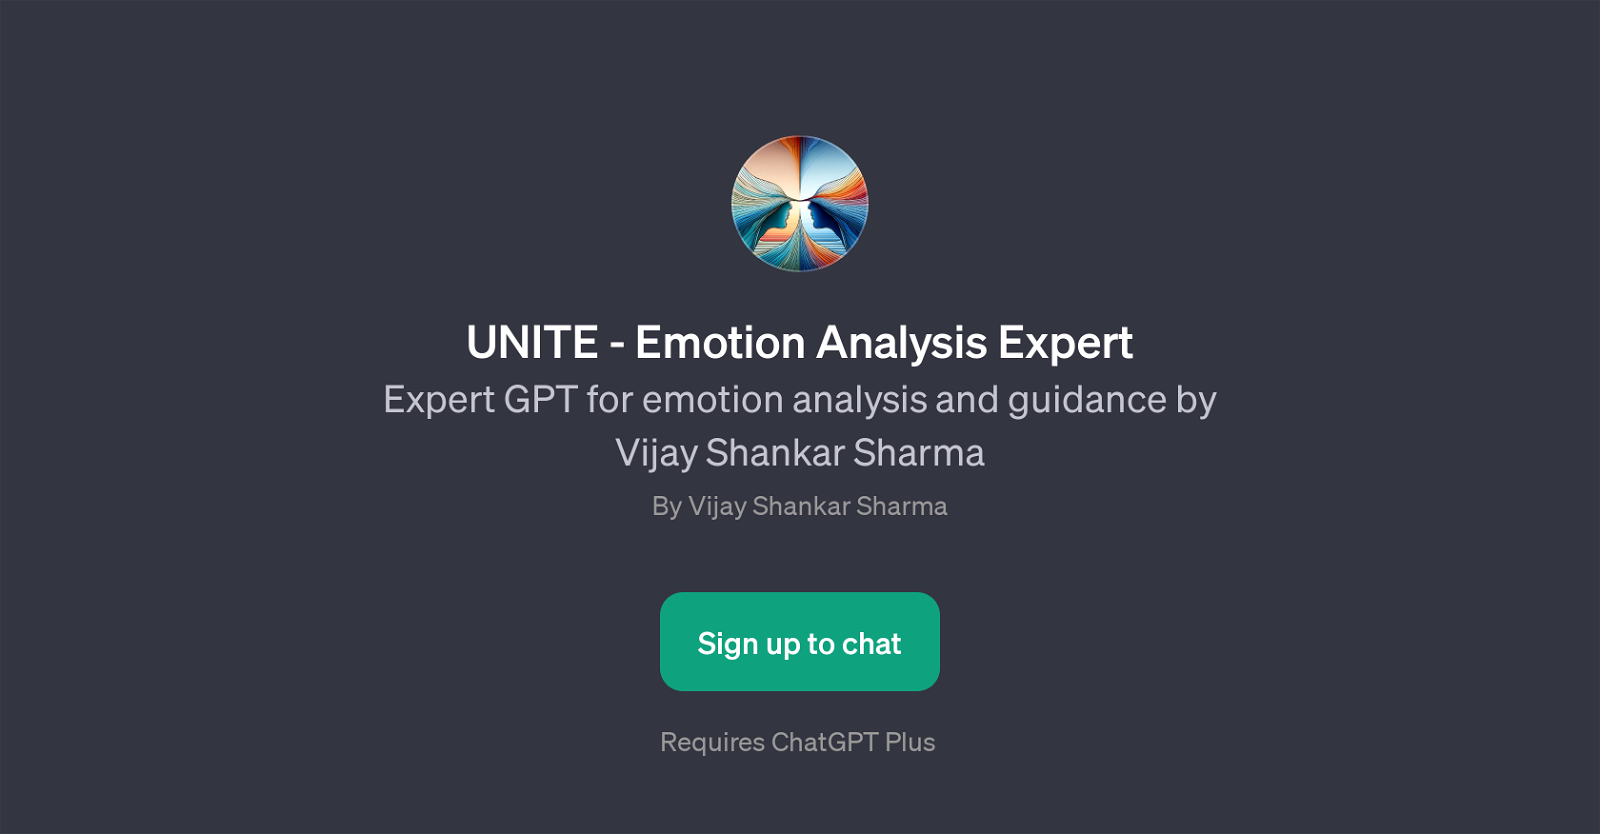 UNITE - Emotion Analysis Expert website